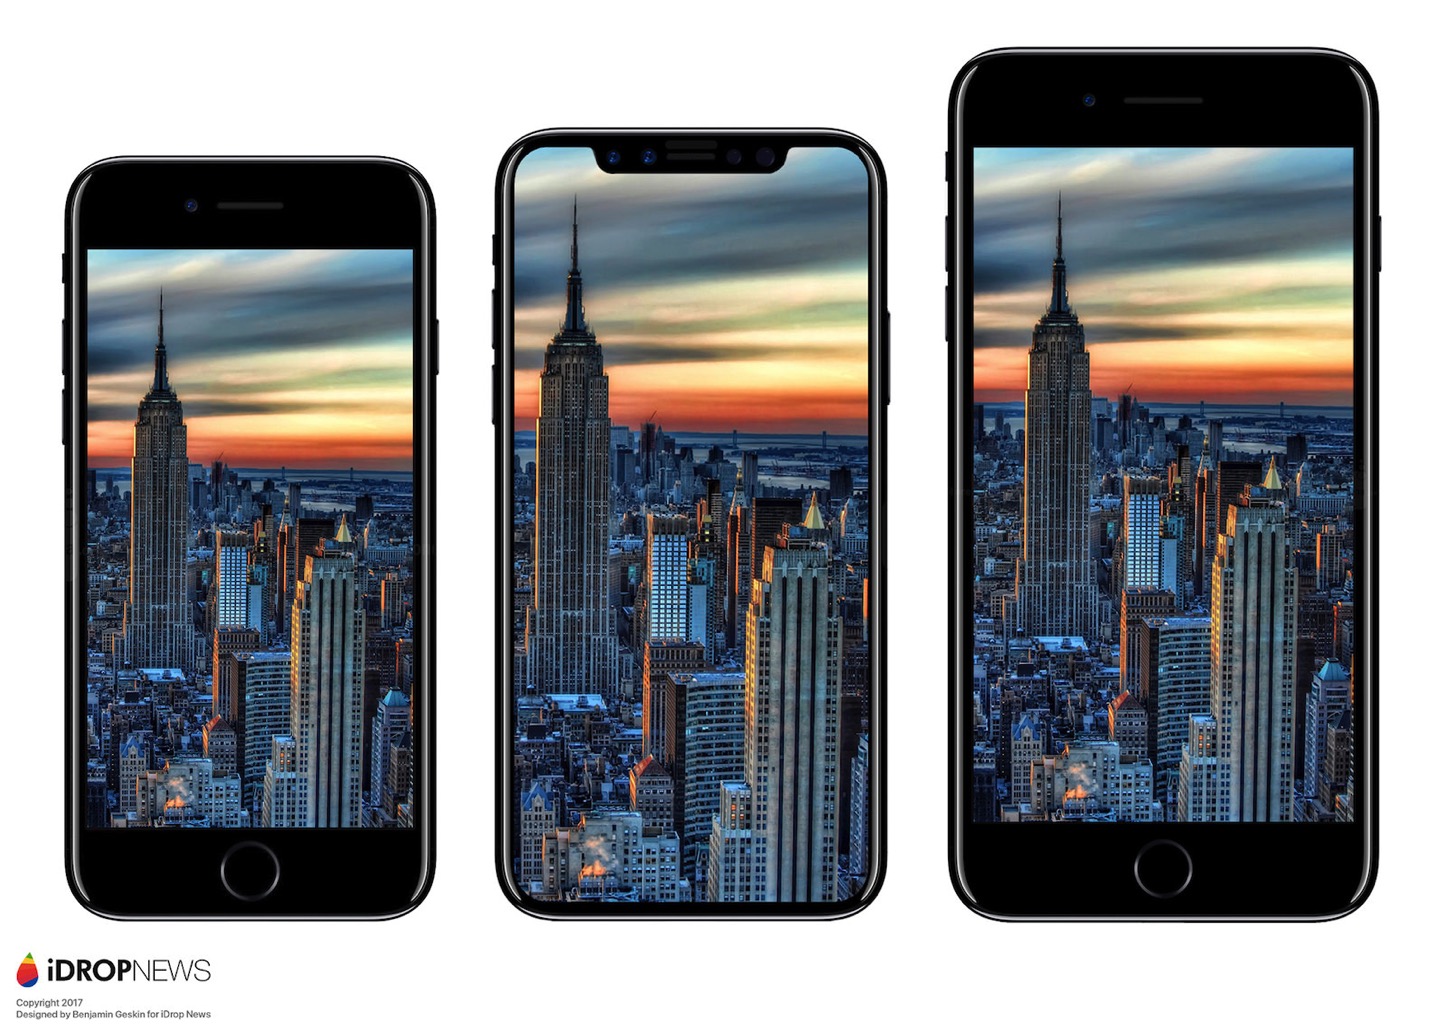 Iphone X Iphone 8 8plus情報まとめ 予約 発売日 値段 機能 スペック サイズ